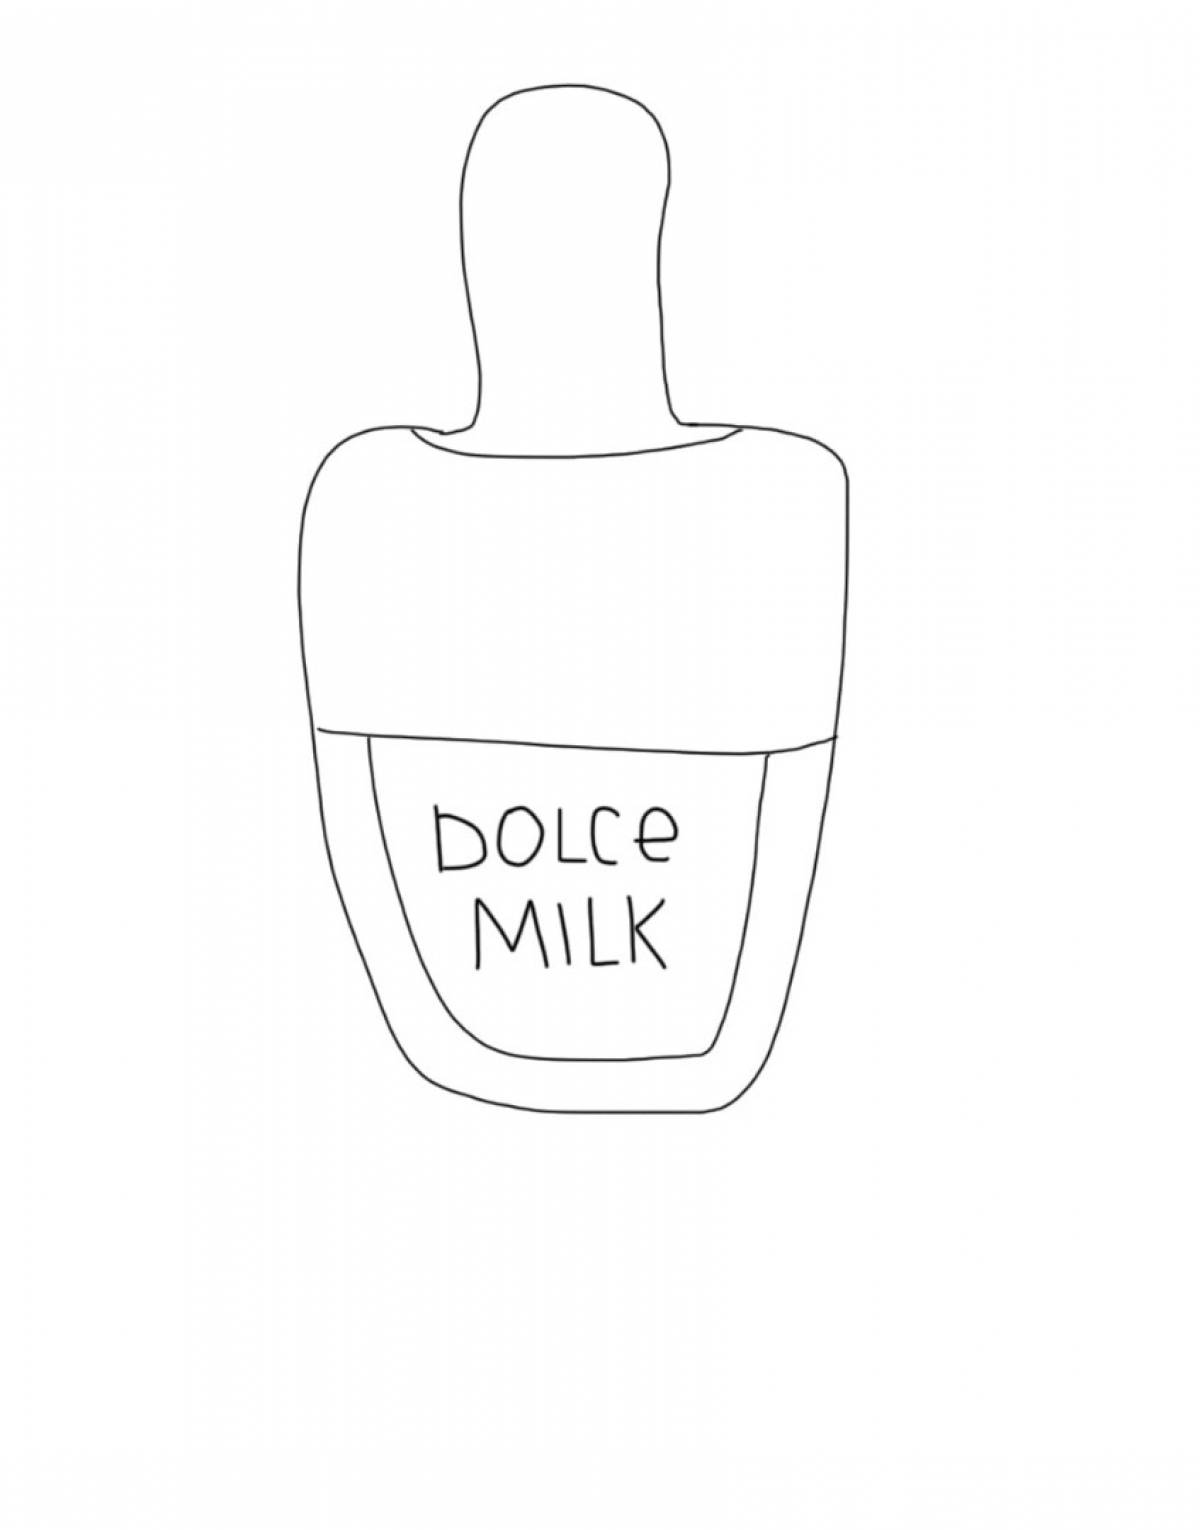 Dolce milk black white #11